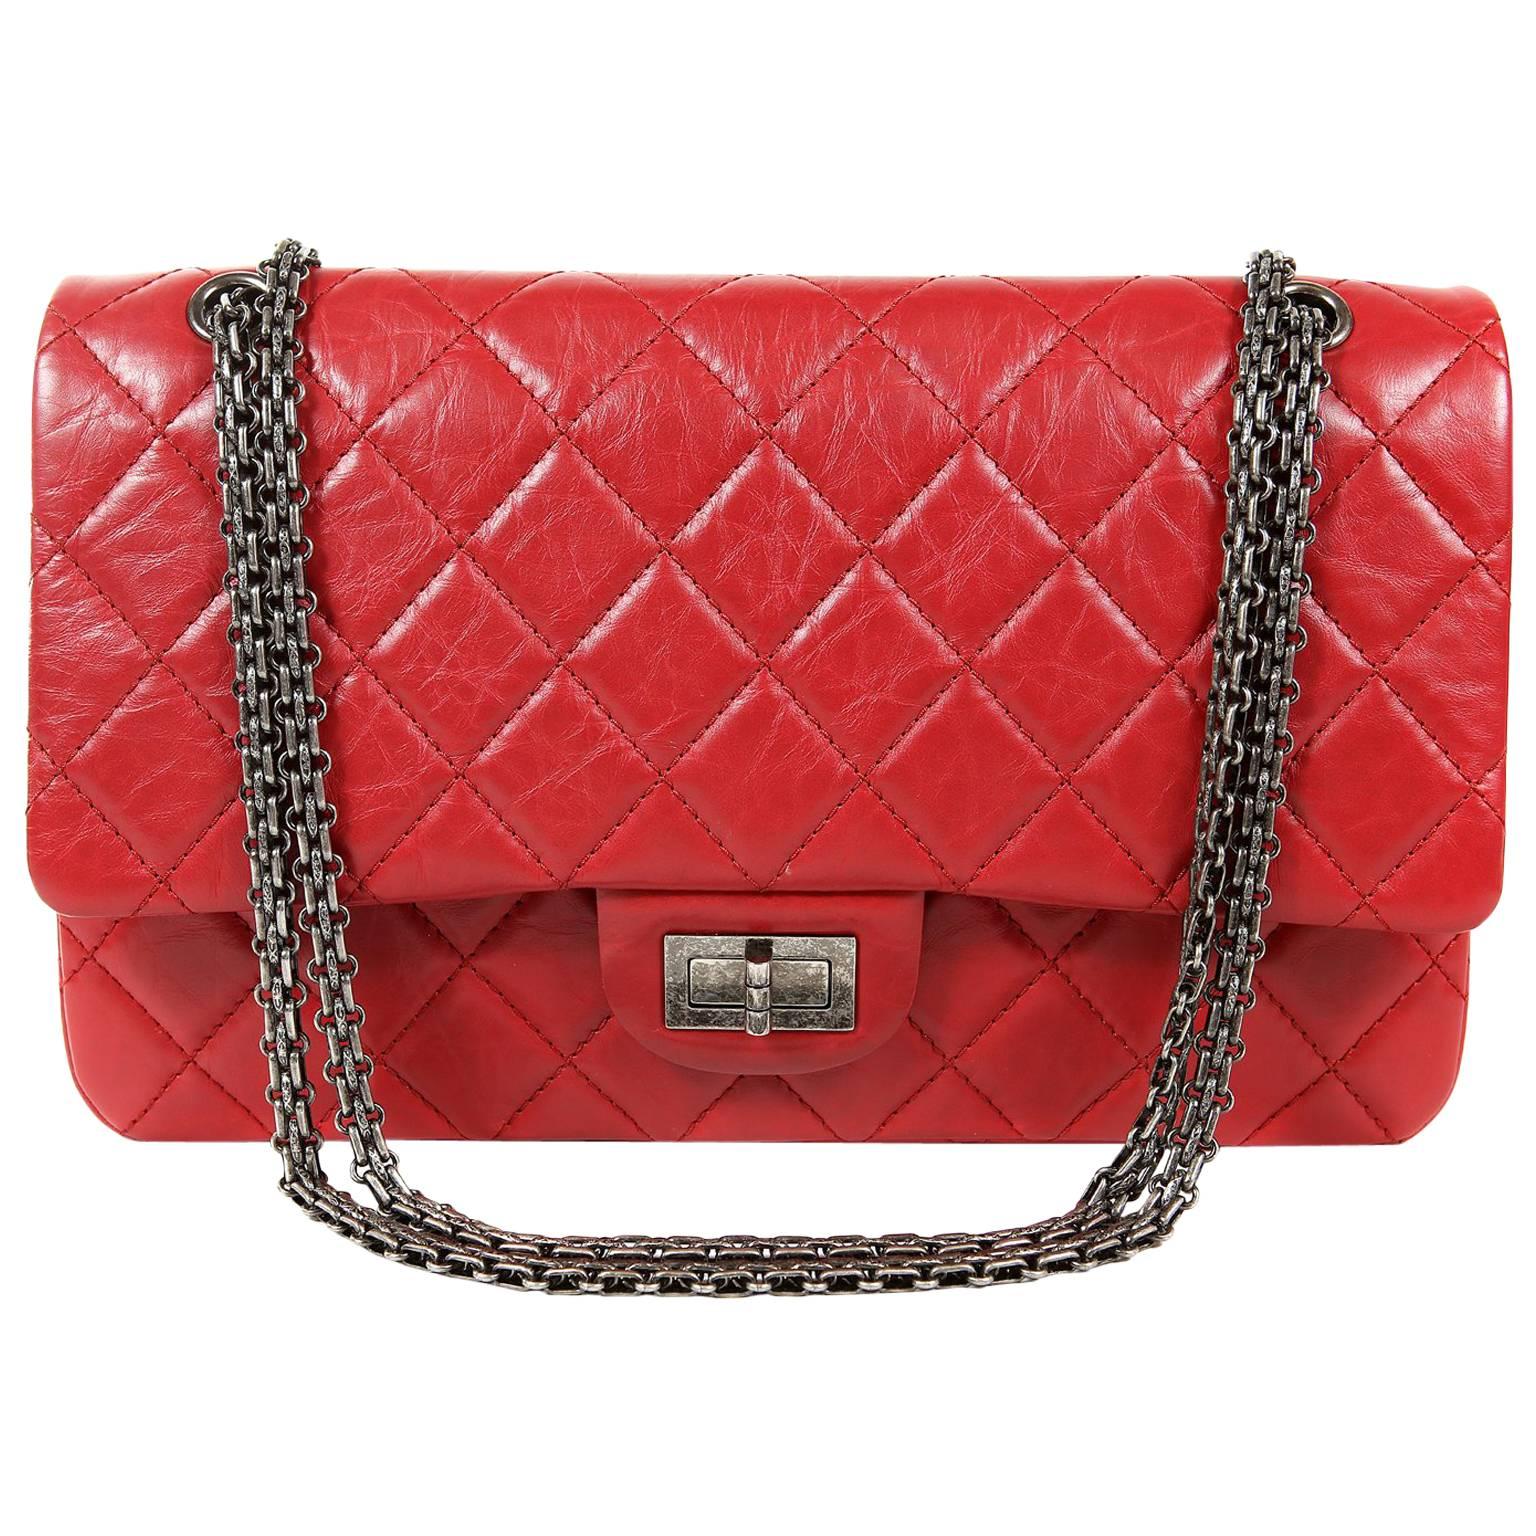 Chanel Handbags Skyrocket in Value  Investment Value of Chanel Purses